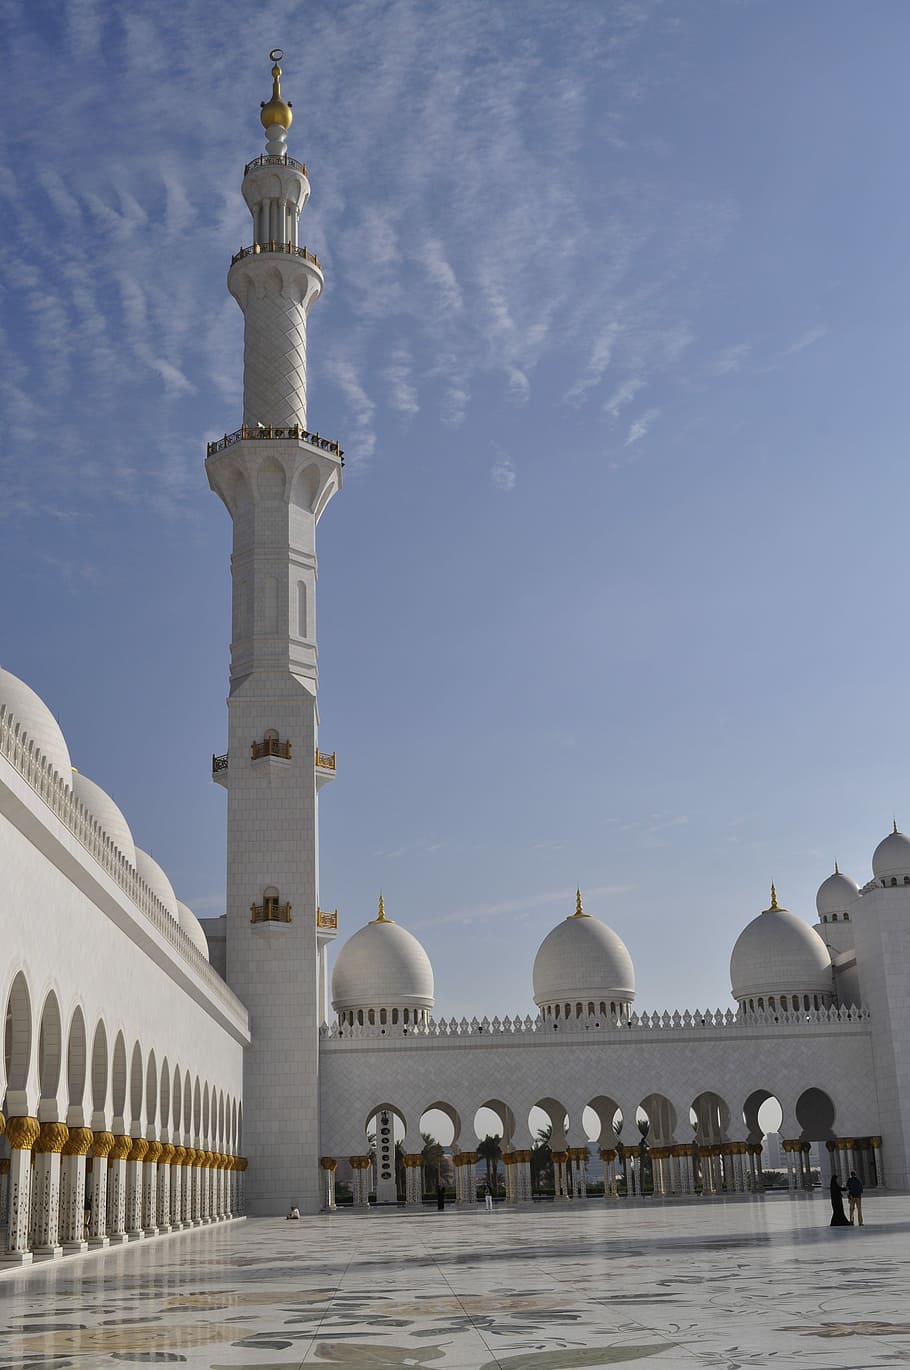 Abu Dhabi, Grand Mosque, Sun, architecture, islam, muslim, zayed, mosque, minaret, religion